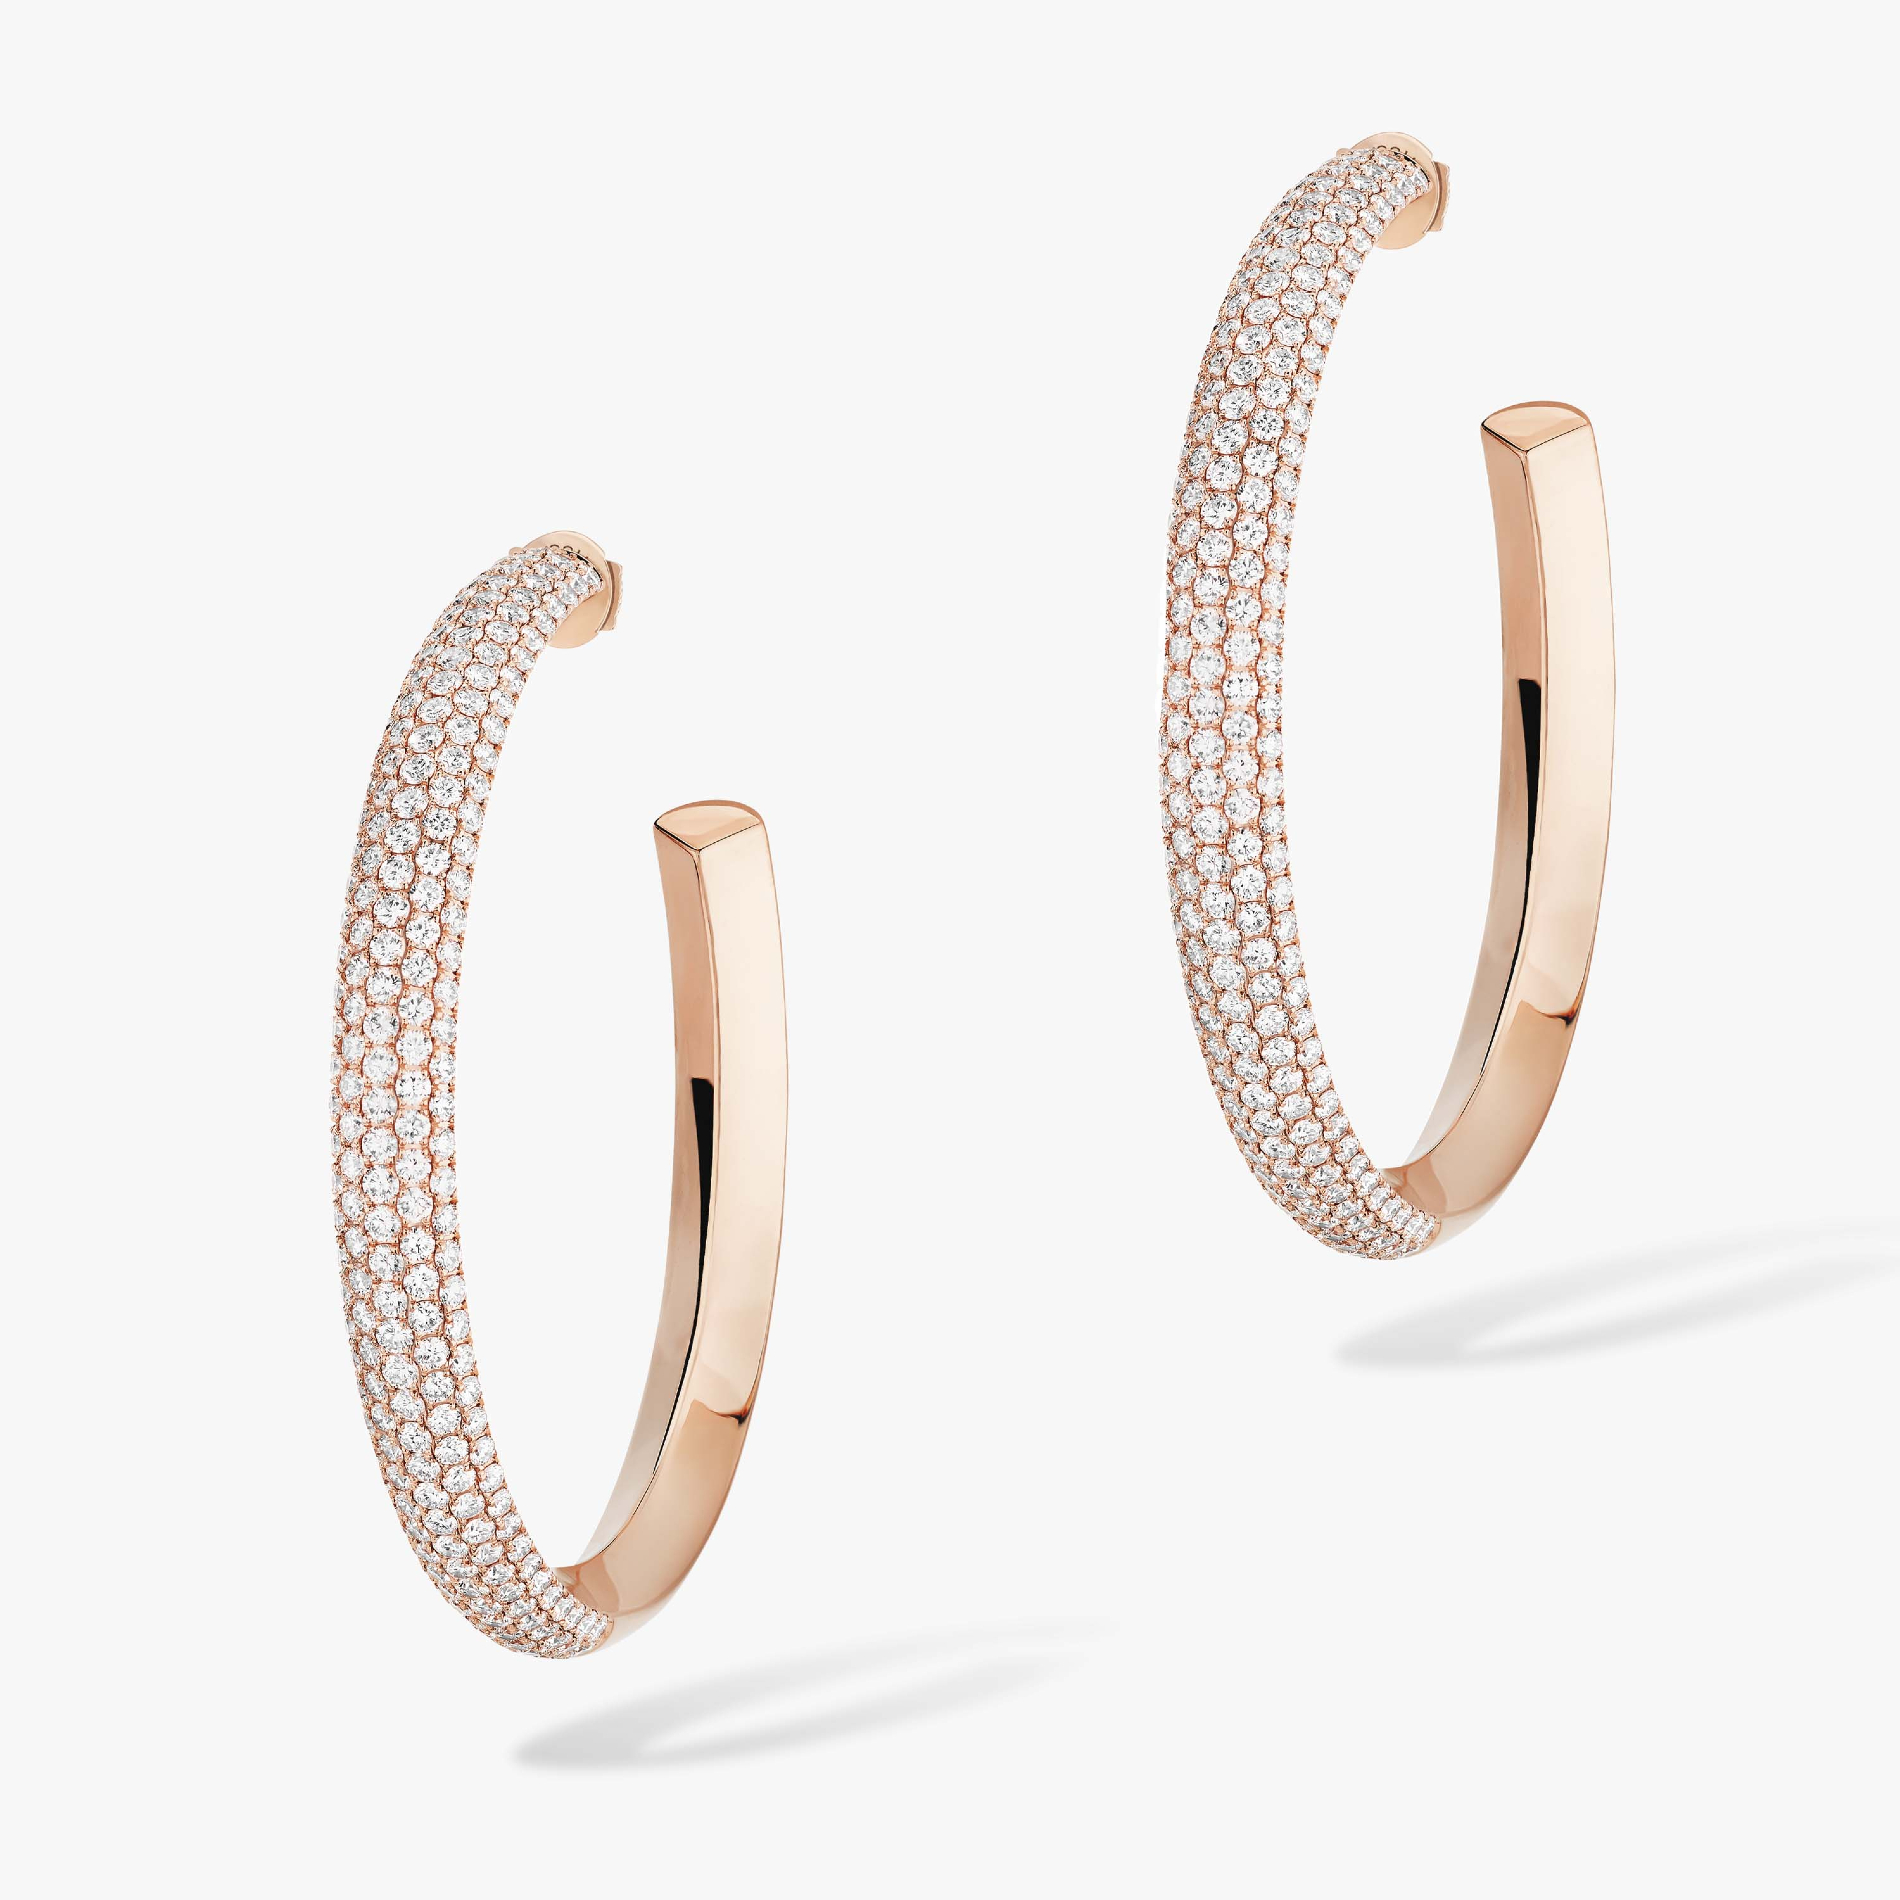 Divine Enigma LM hoop earrings Pink Gold For Her Diamond Earrings 12514-PG